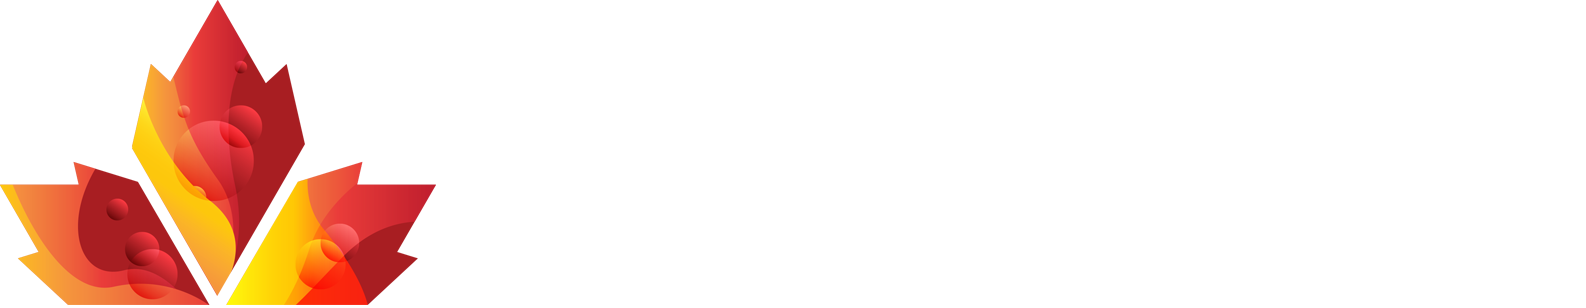 Maple 54 Logo